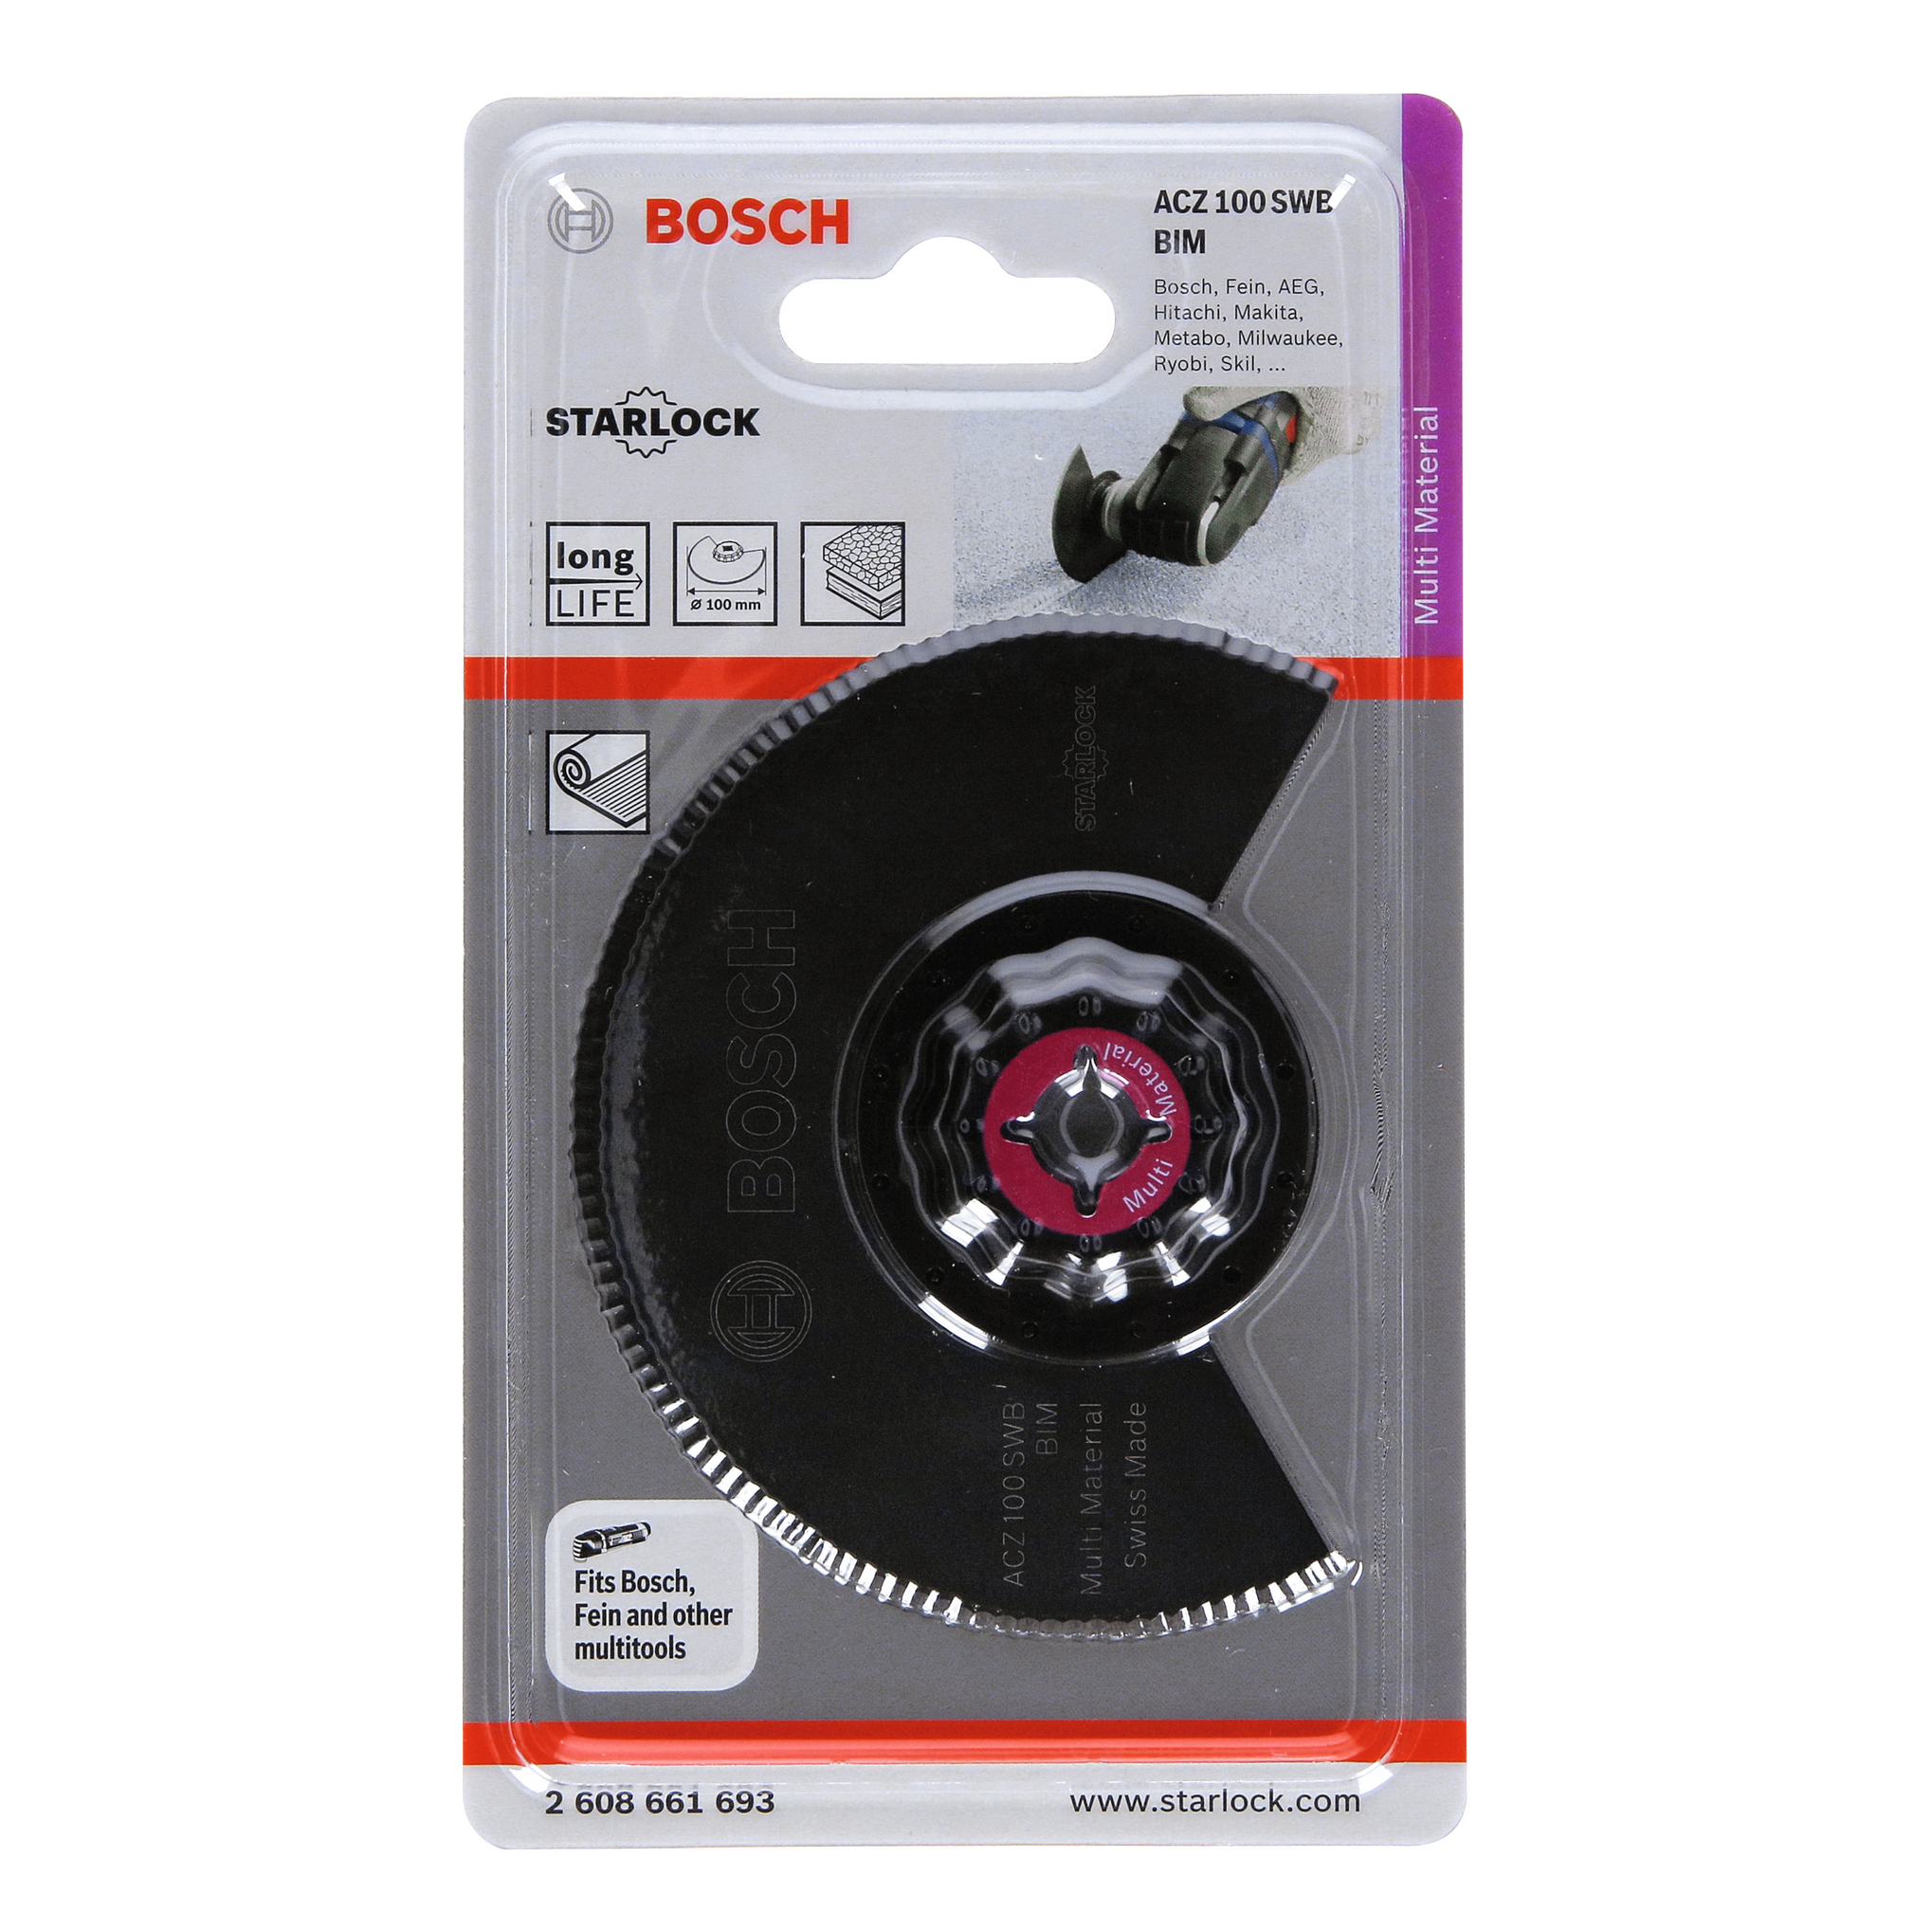 Bosch Starlock ACZ 100 SWB blade 2608661693 Power Tool Services